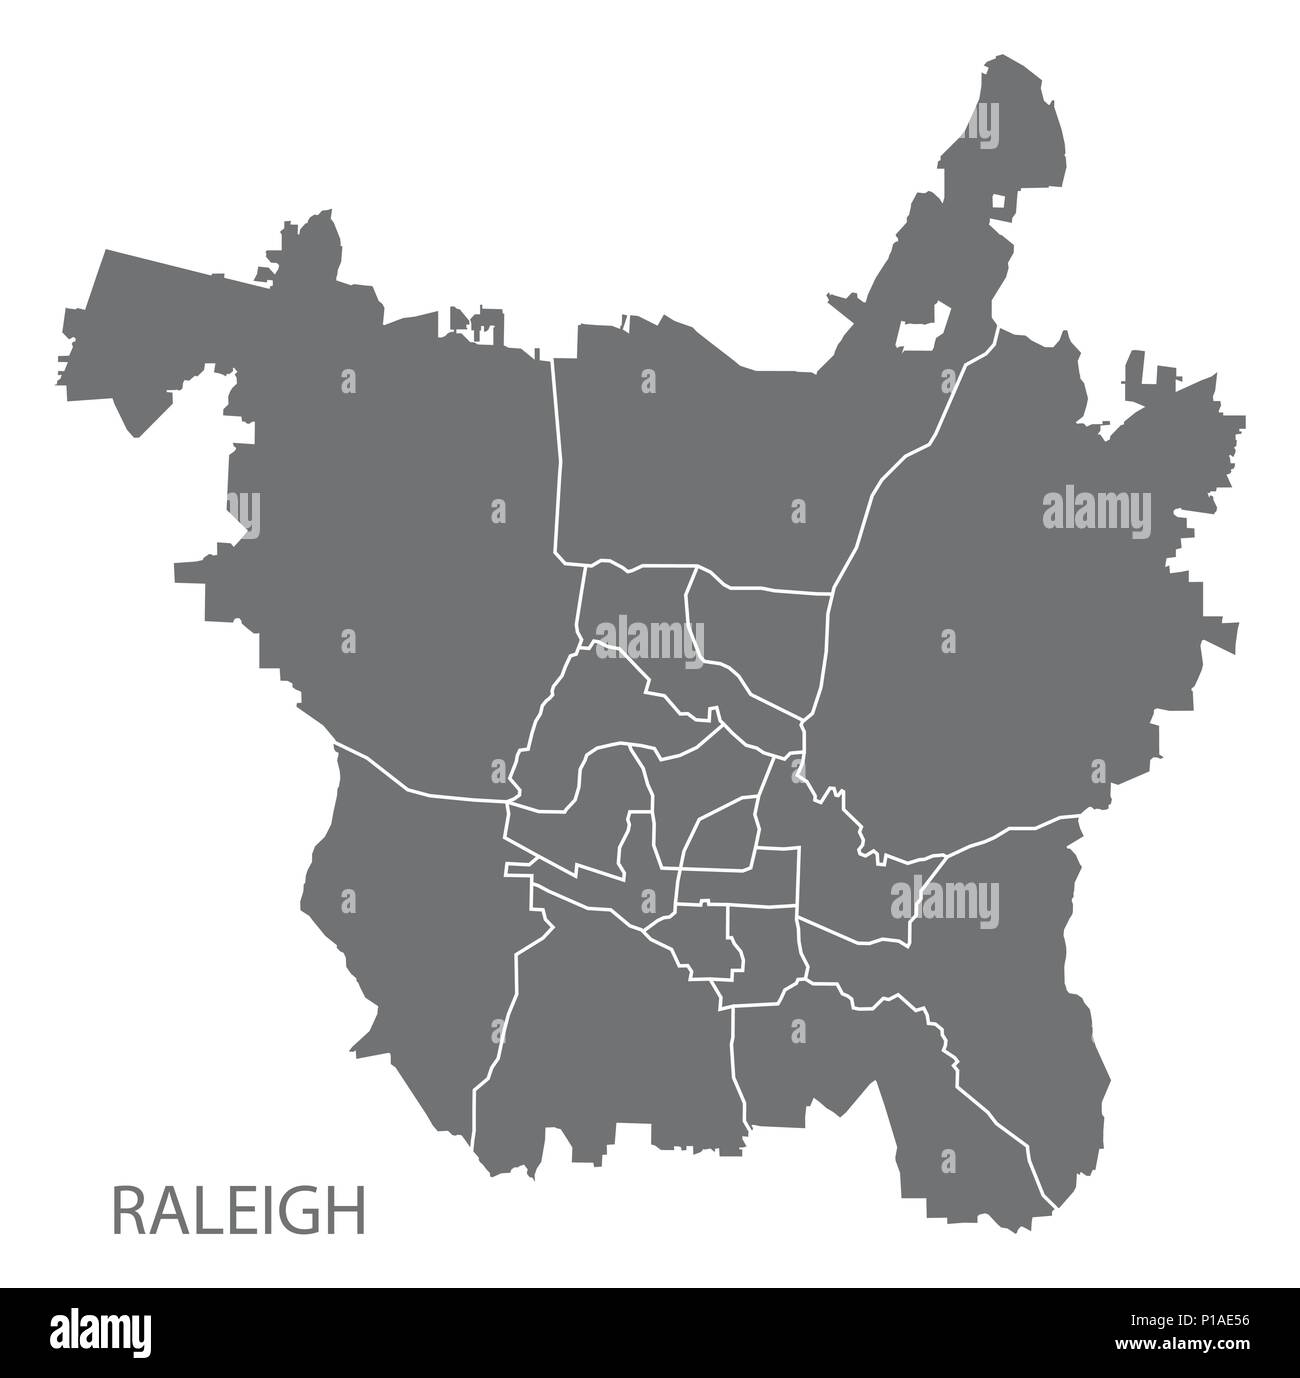 Raleigh North Carolina city map with neighborhoods grey illustration silhouette shape Stock Vector